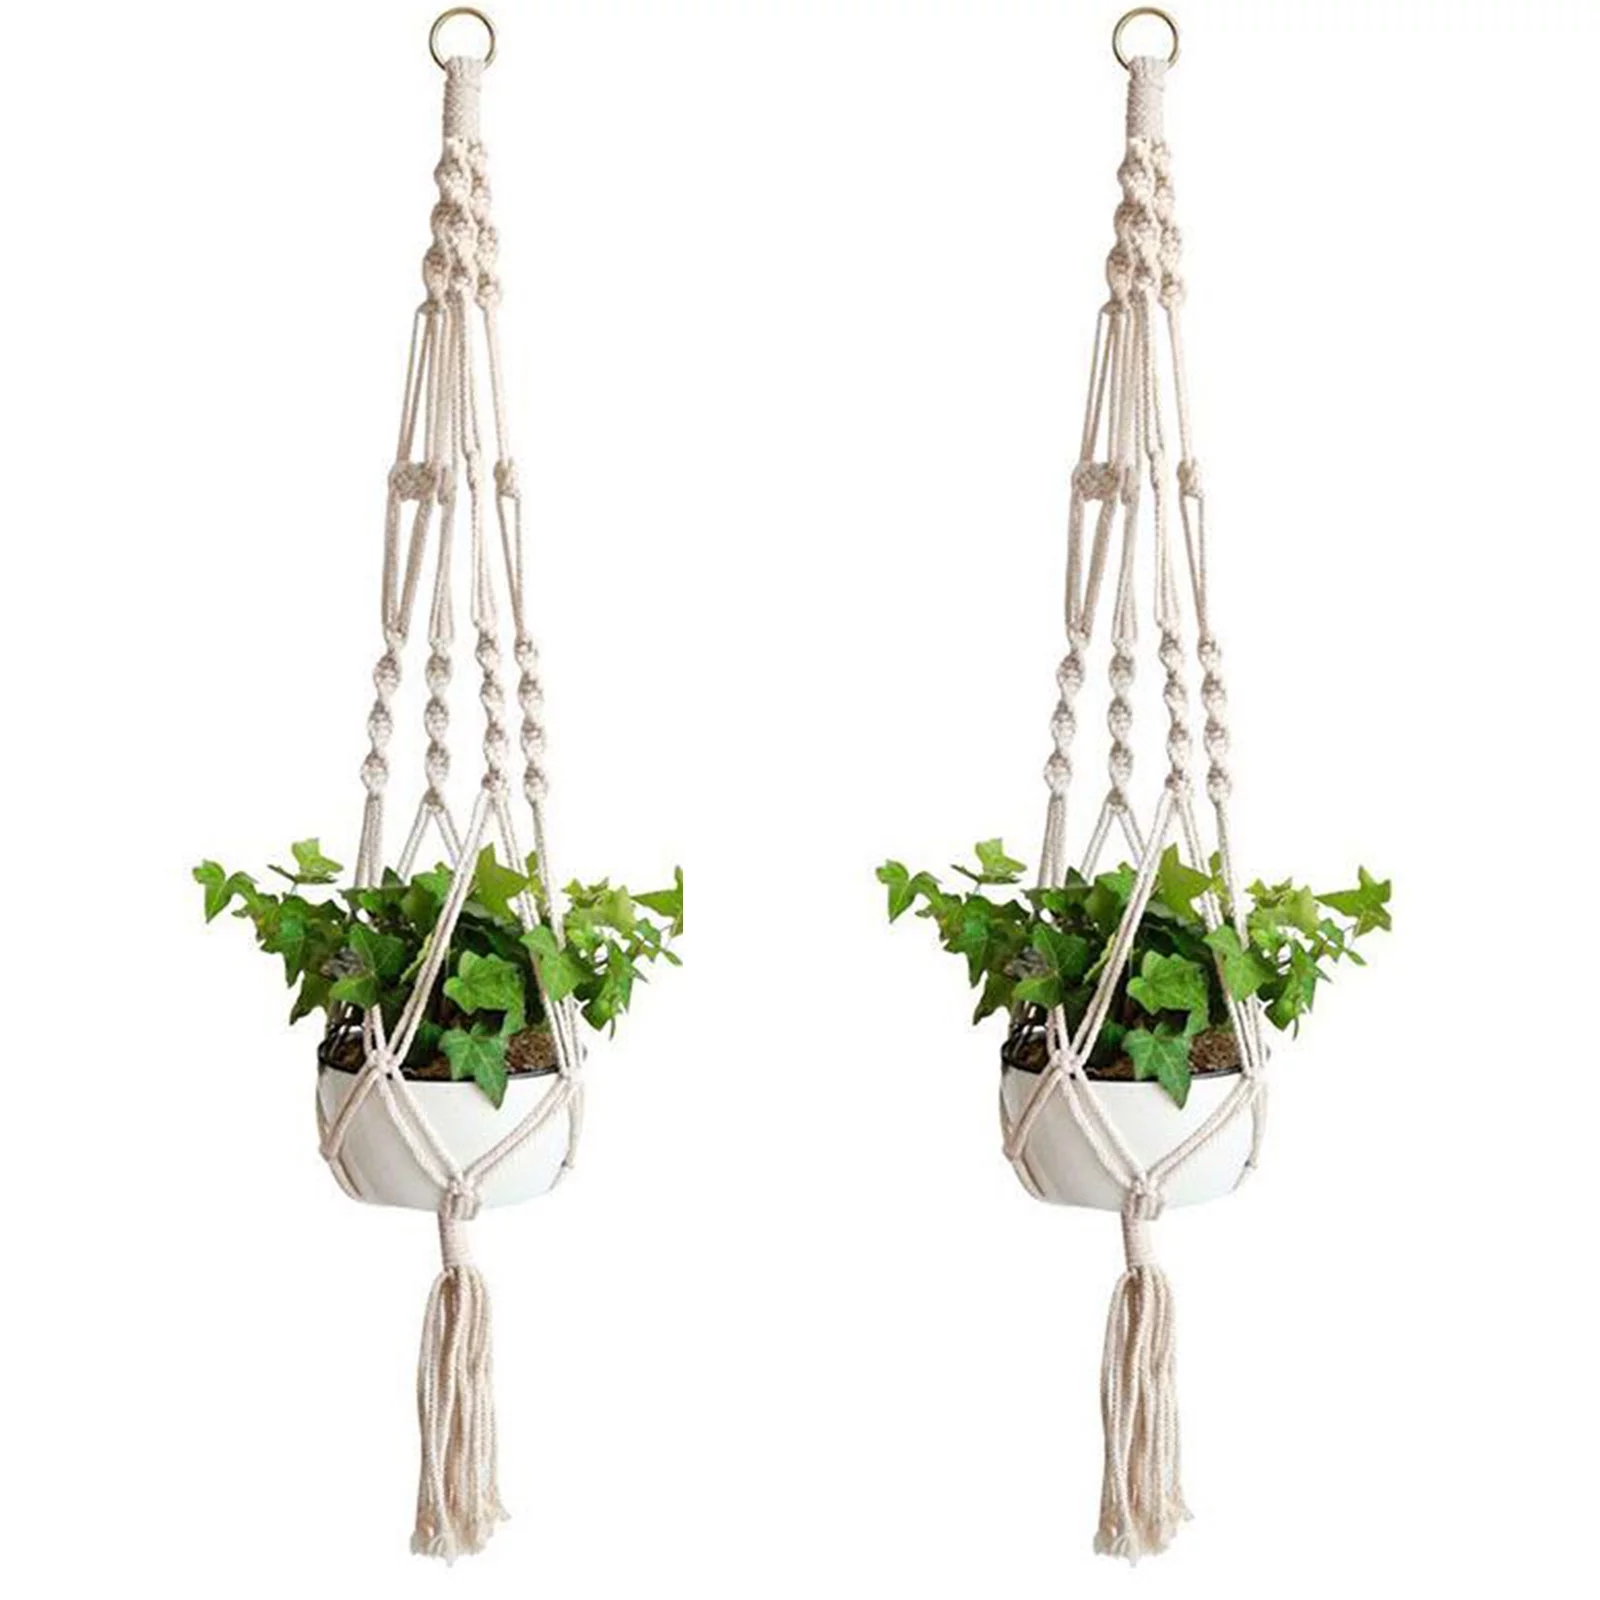 EEEkit 2pcs Macrame Plant Hangers, Indoor Outdoor Hanging Planter Baskets, Decorative Flower Pot Holders for Succulents Cacti Herbs, Boho Home Decor